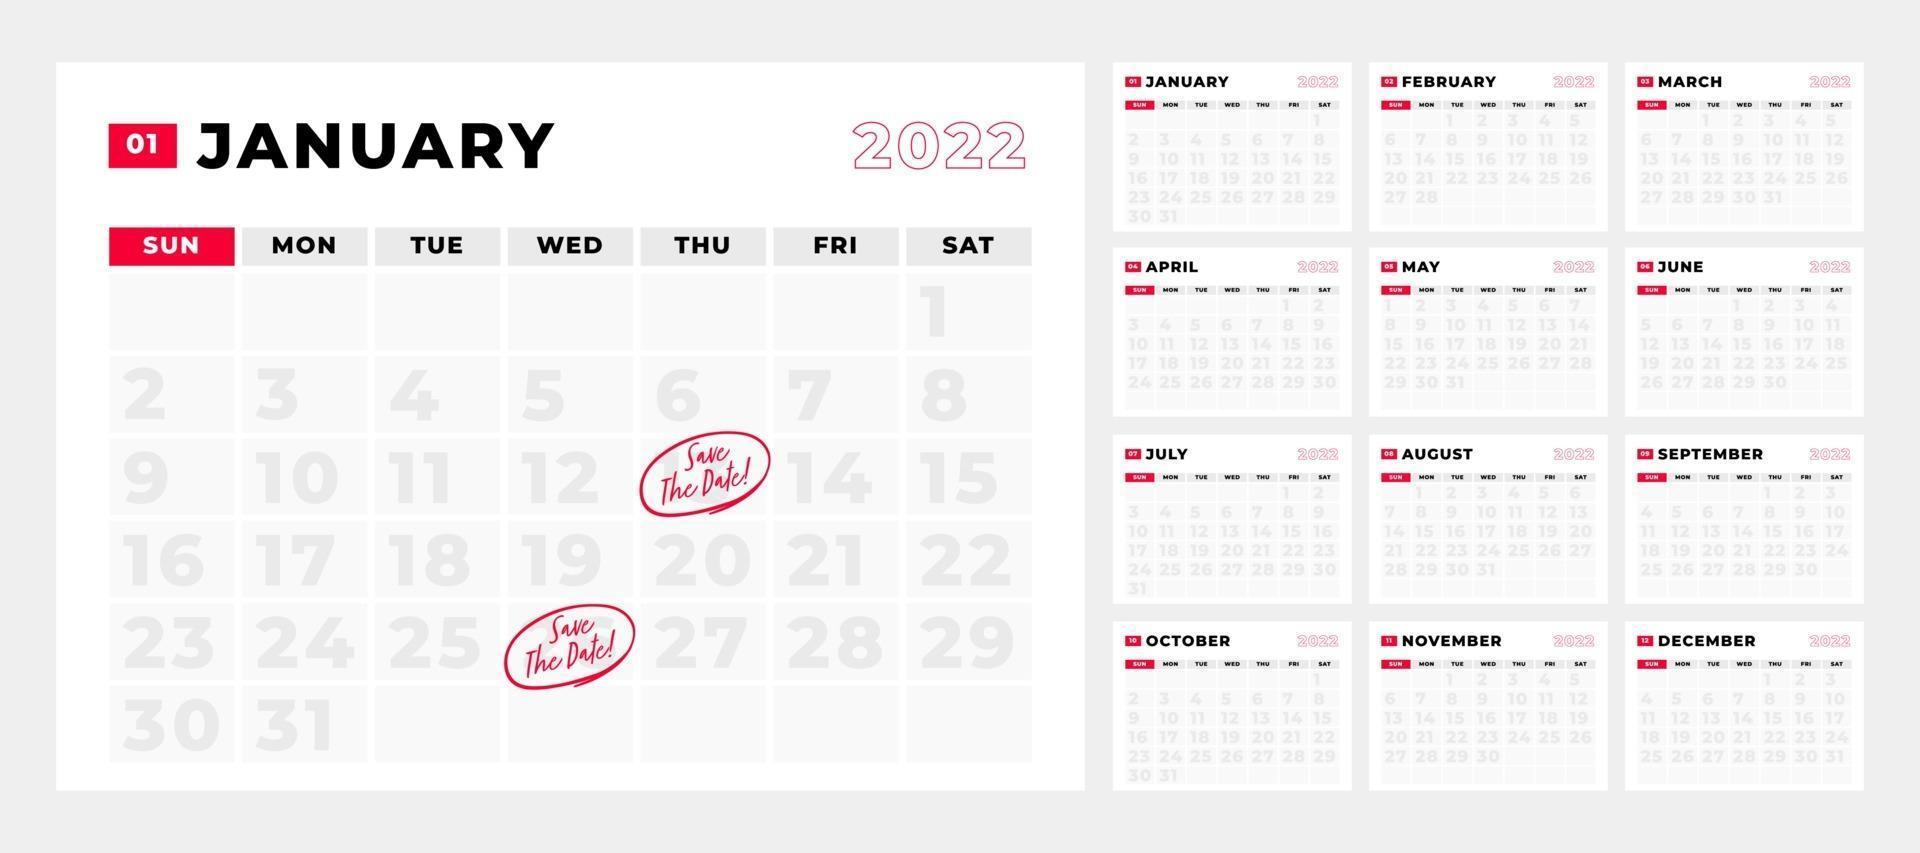 kalender 2022, 12 månader i ren minimalistisk tabell enkel stil. vektor